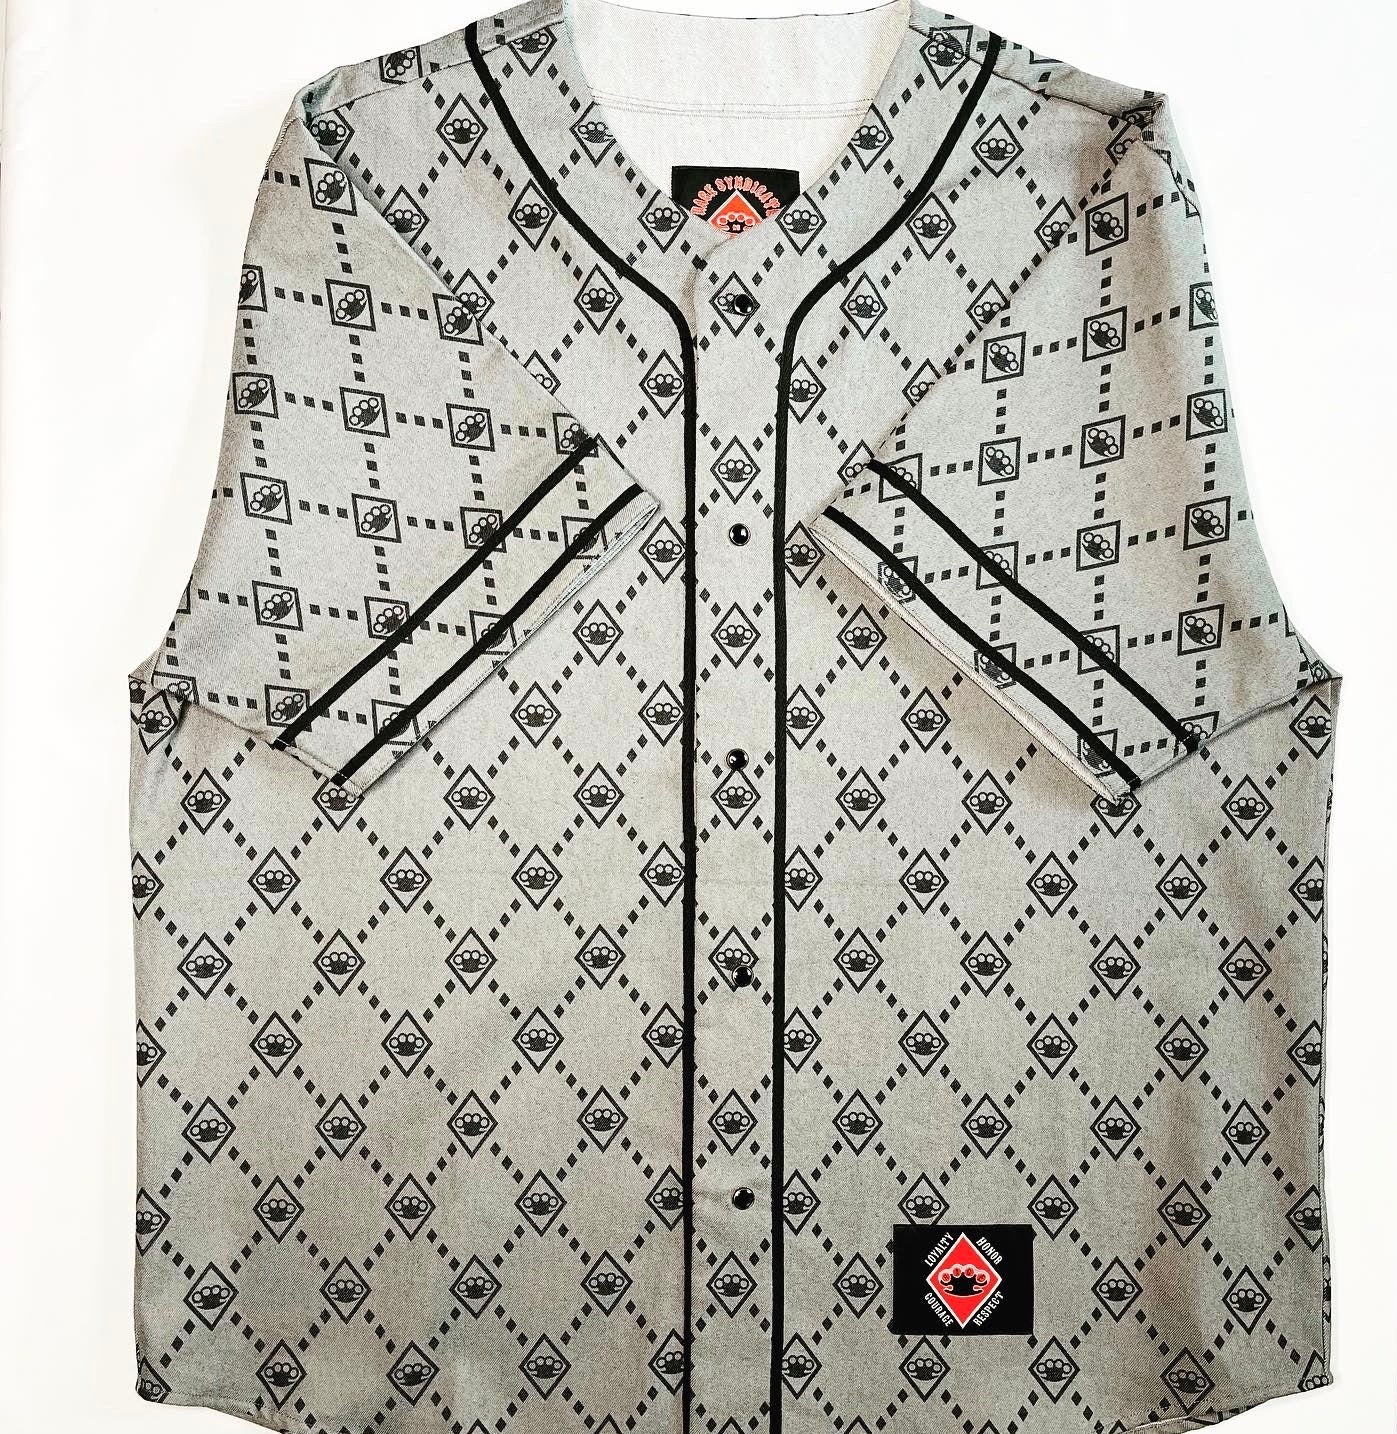 Buy OG Crinkled Denim Baseball Jersey Men's Shirts from Buyers Picks. Find  Buyers Picks fashion & more at